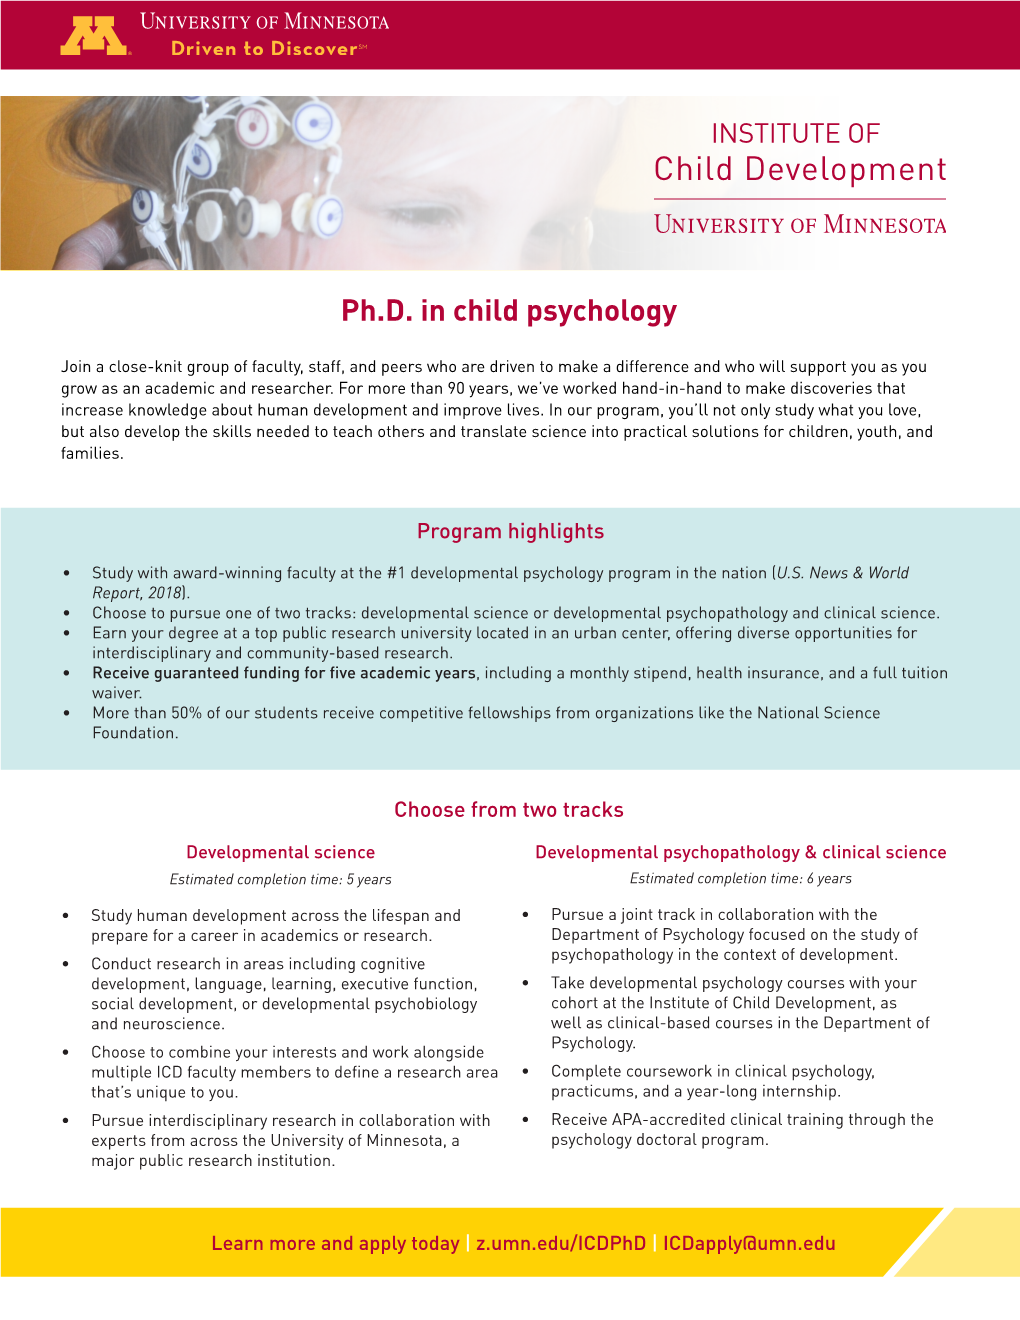 Ph.D. in Child Psychology